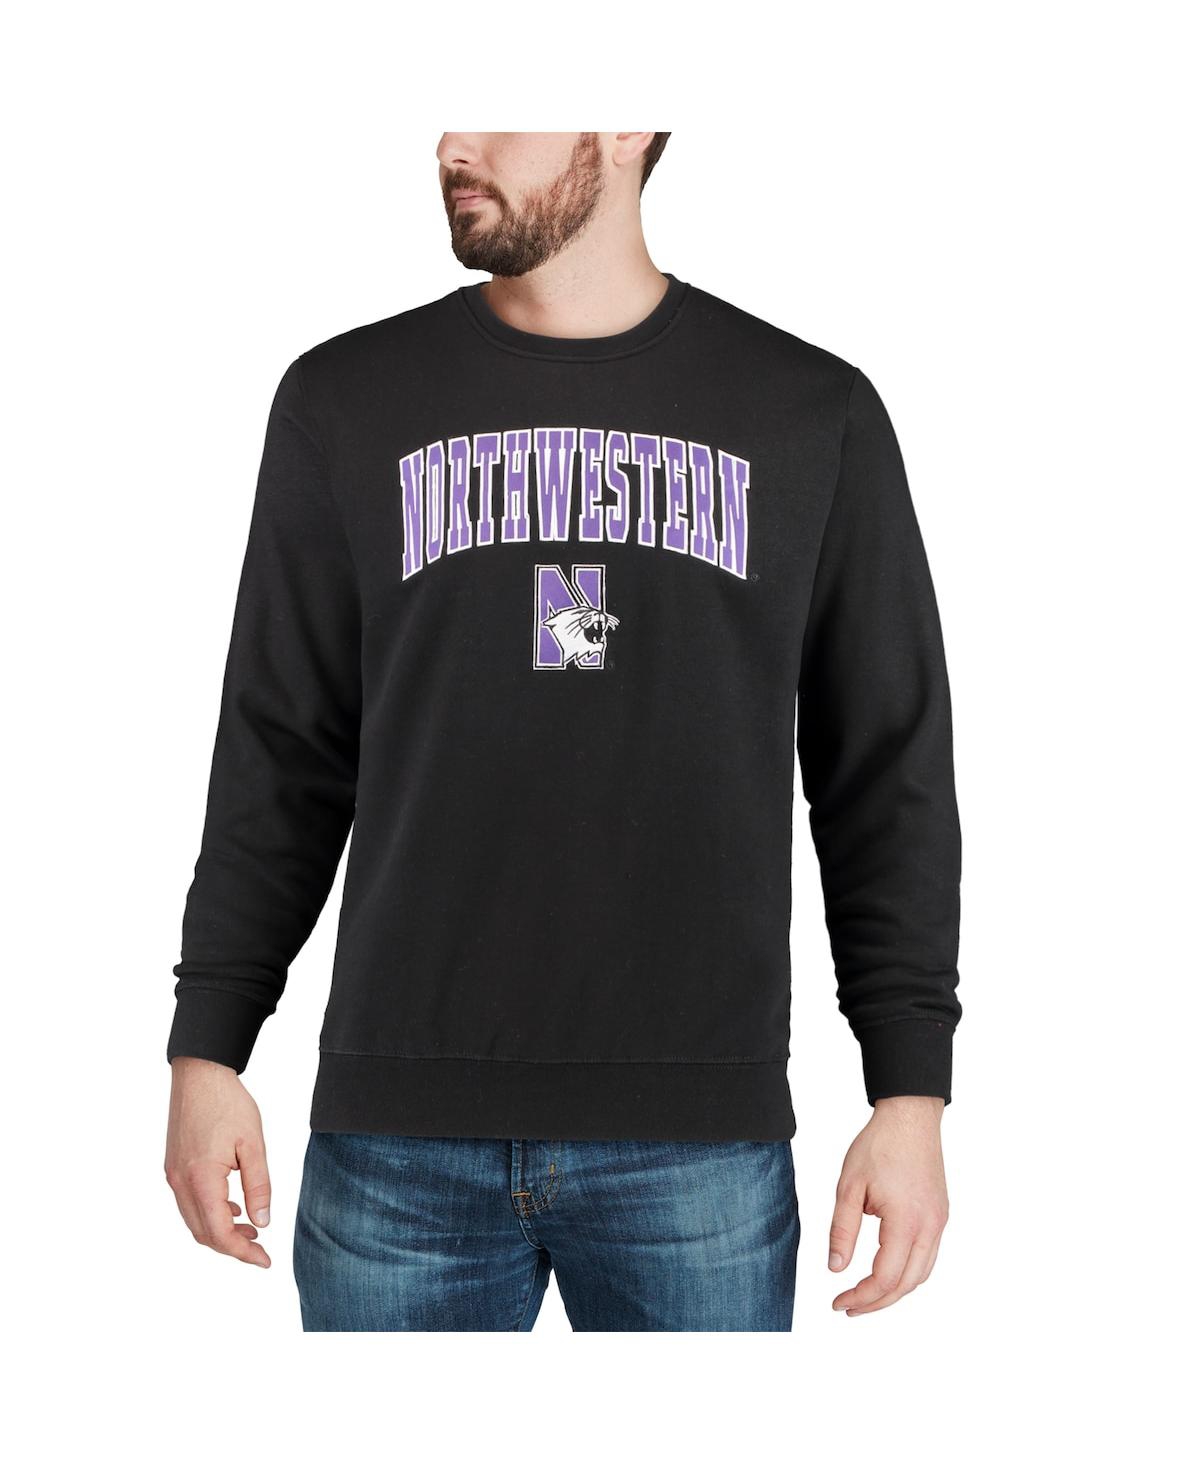 Shop Colosseum Men's  Black Northwestern Wildcats Arch & Logo Crew Neck Sweatshirt